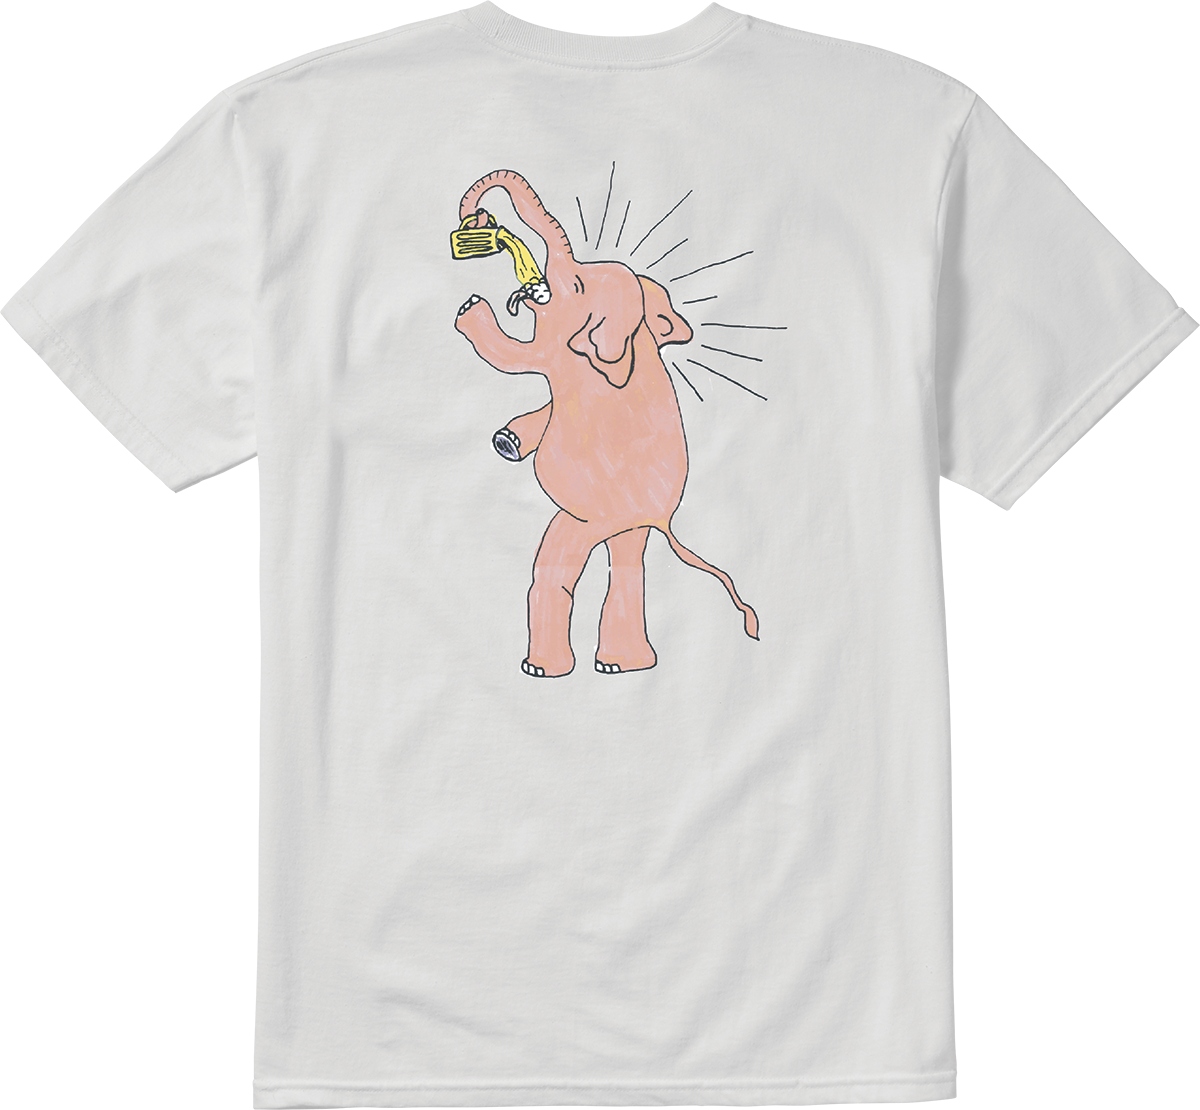 Emerica Mens Pink Elephant Tee White T-Shirt